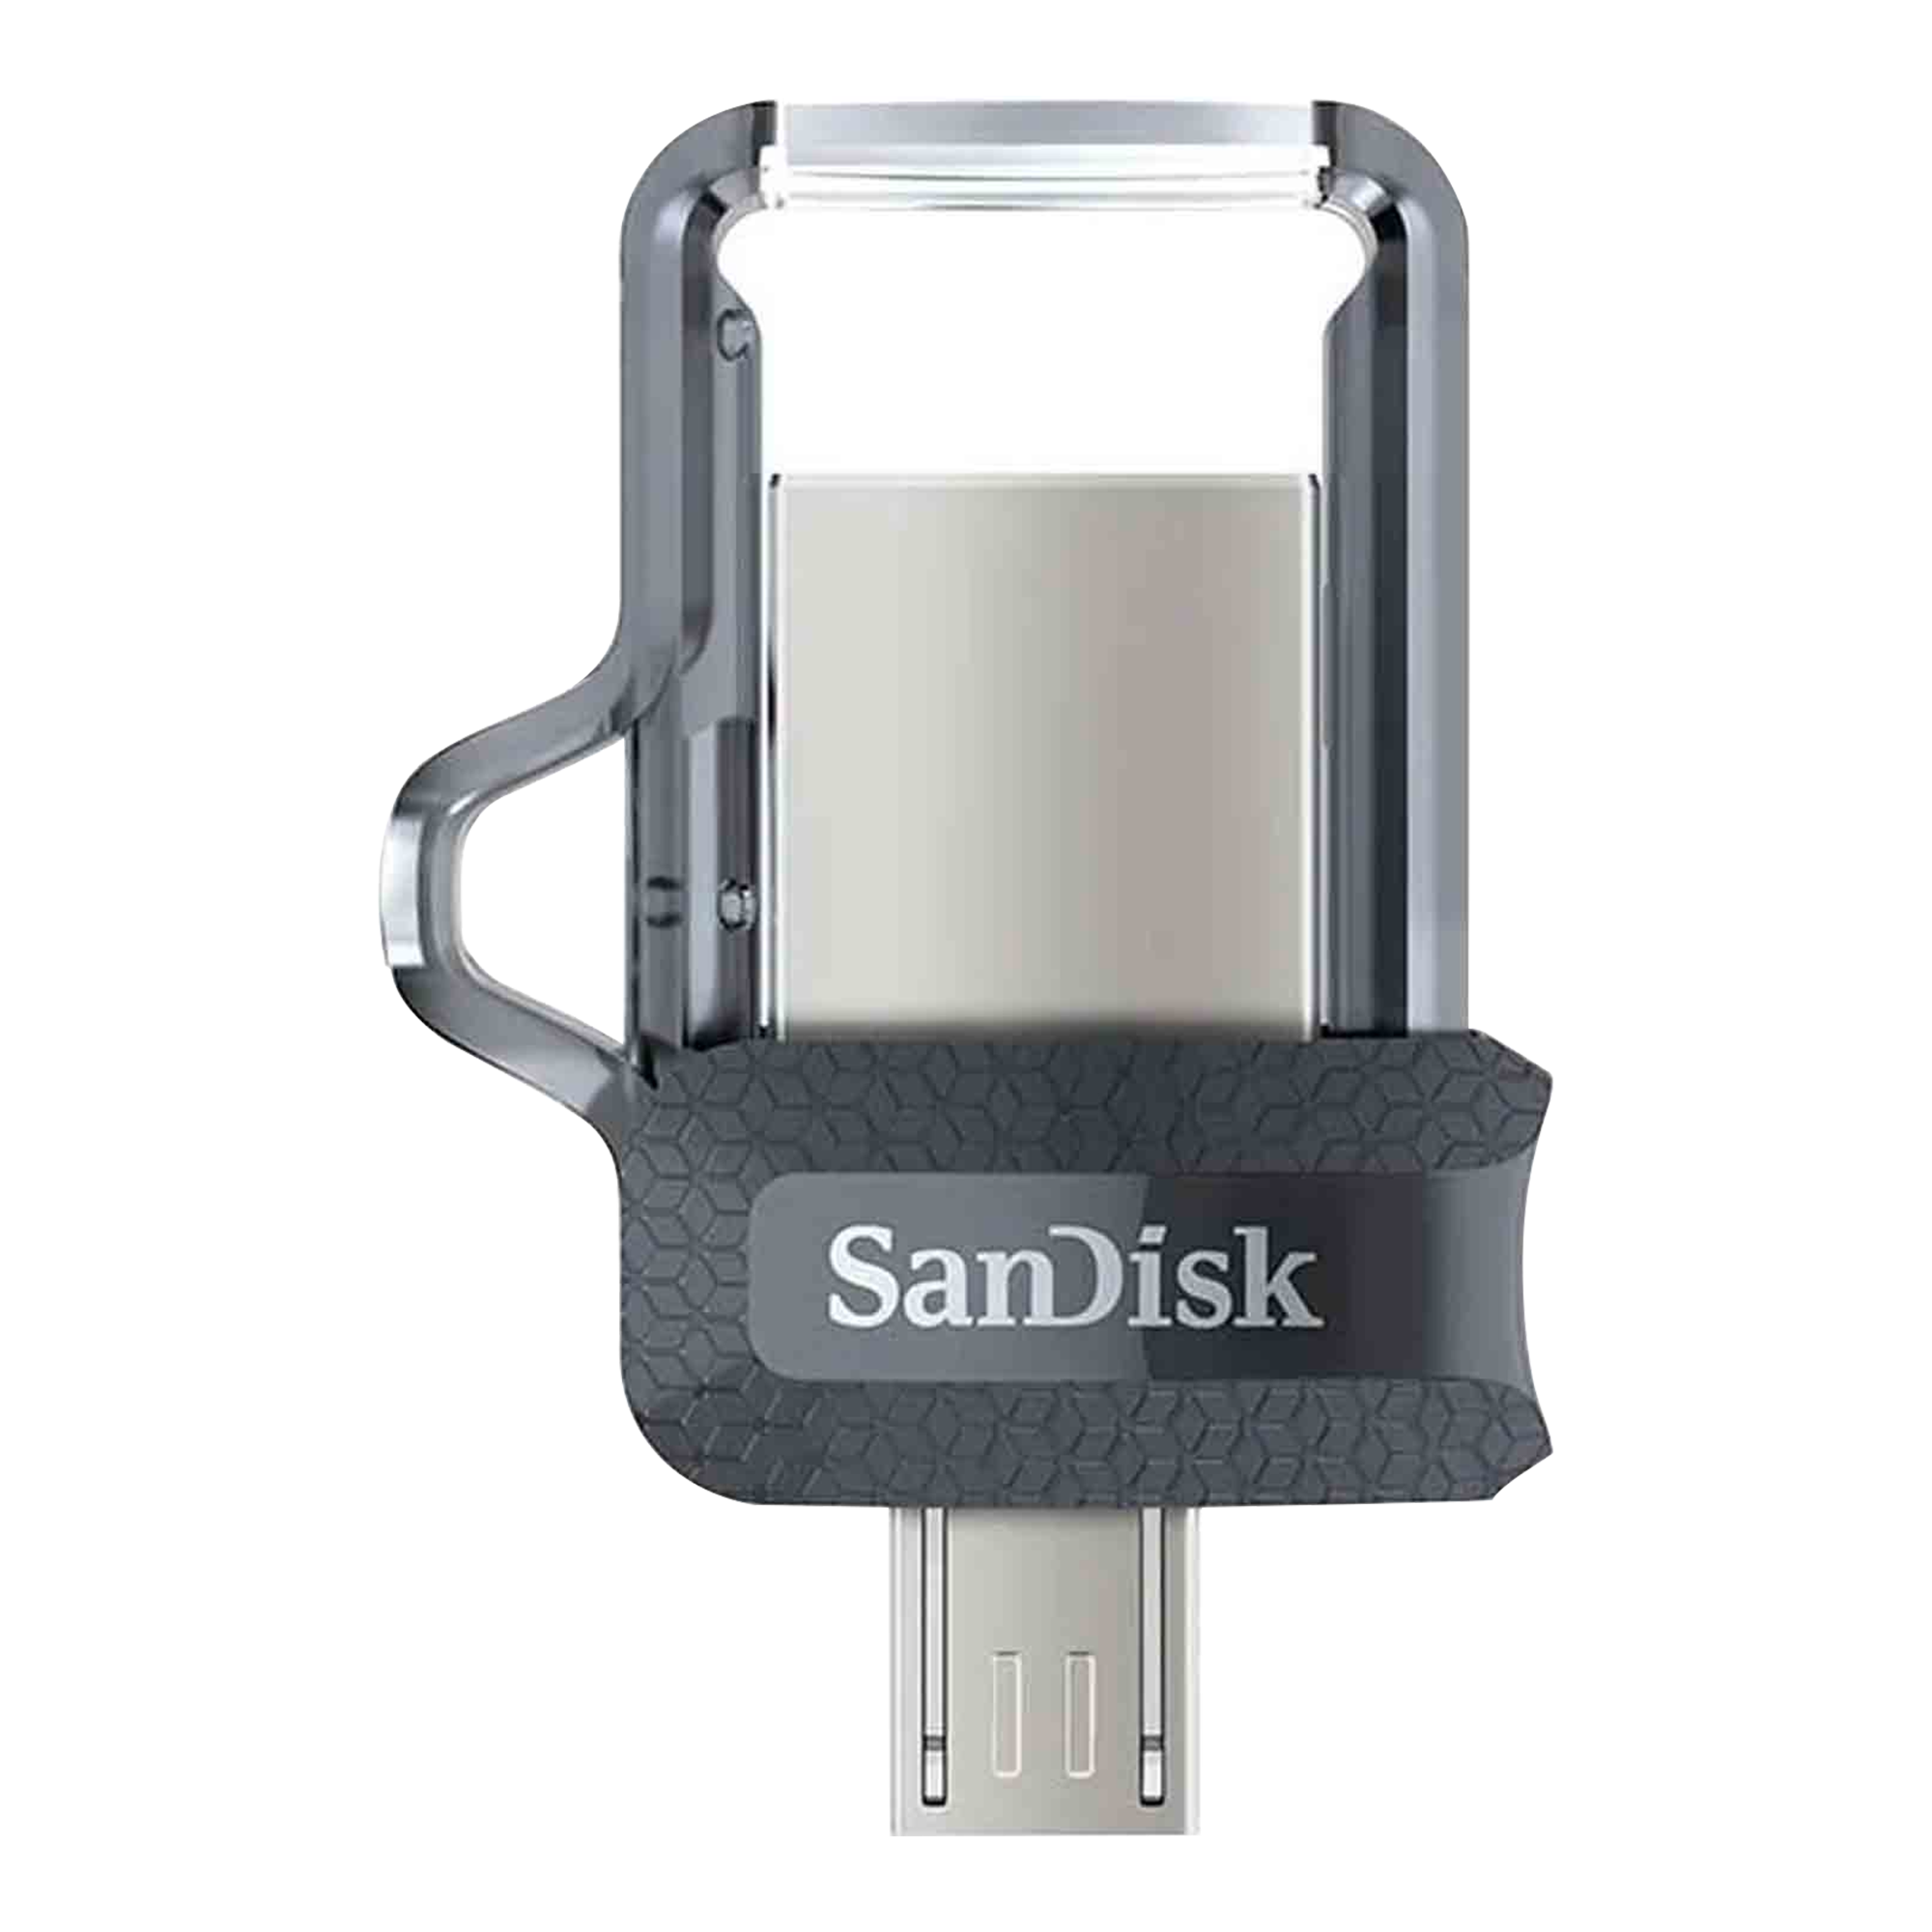 Sandisk Pendrive 128gb in Madina - Computer Accessories , Hub Computers